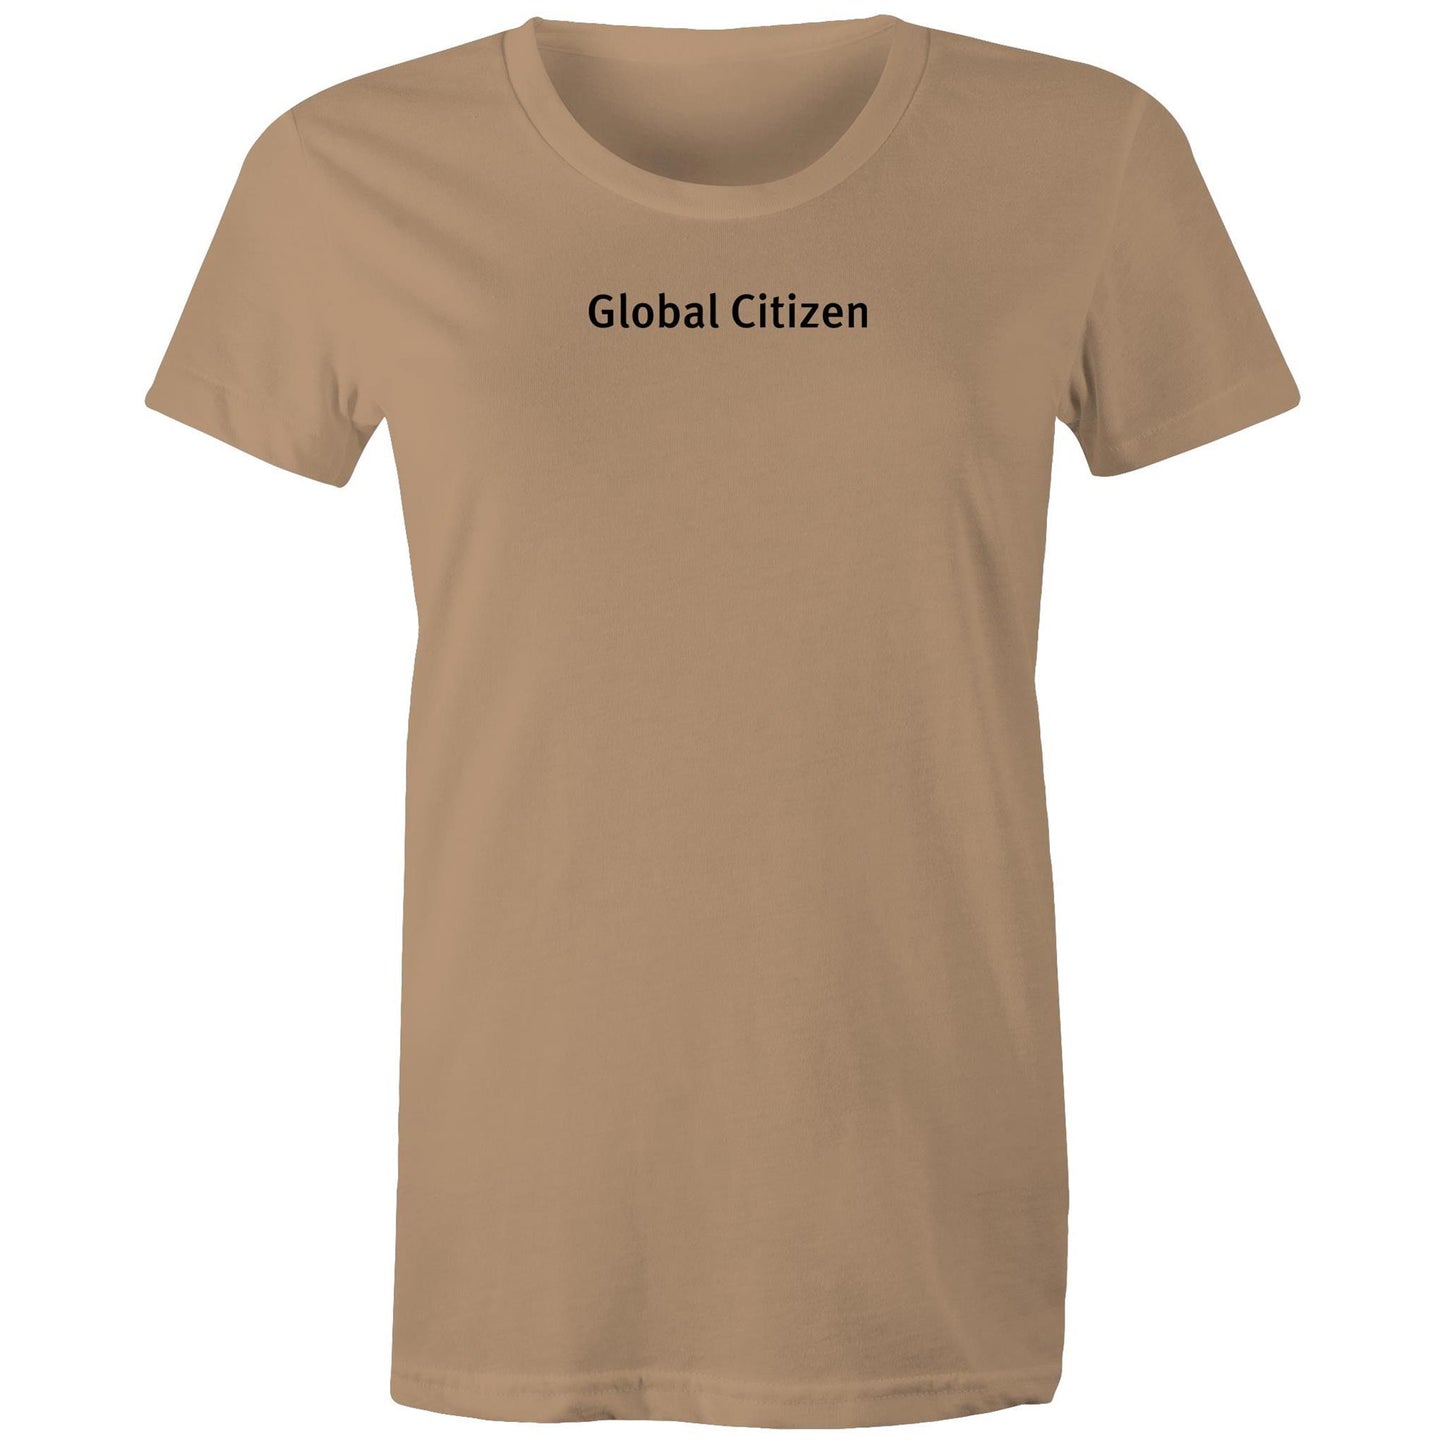 Global Citizen T Shirts for Women